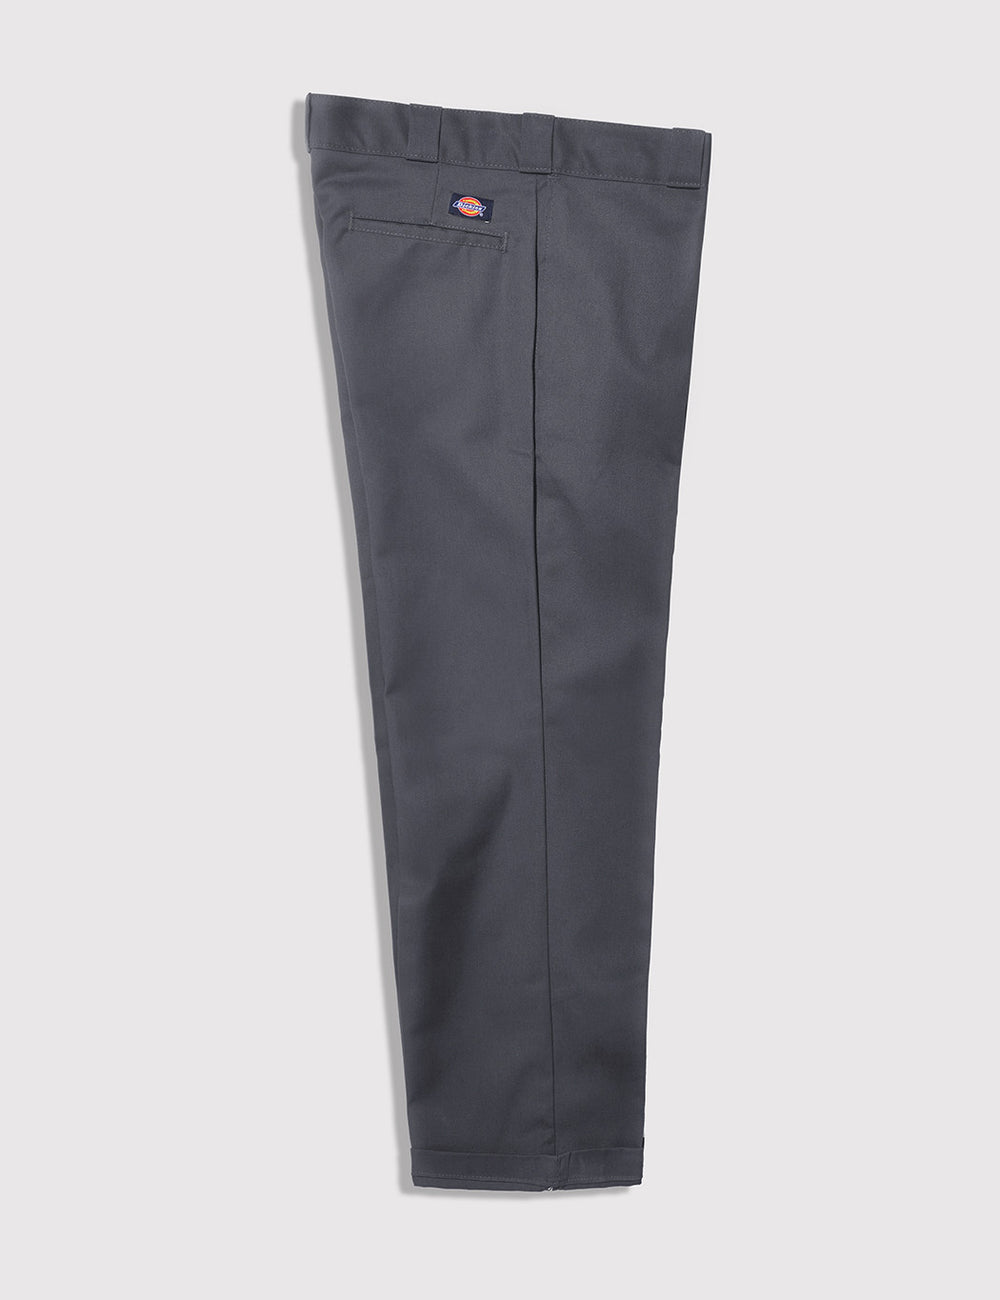 Dickies 873 work pants in charcoal gray slim straight - GRAY